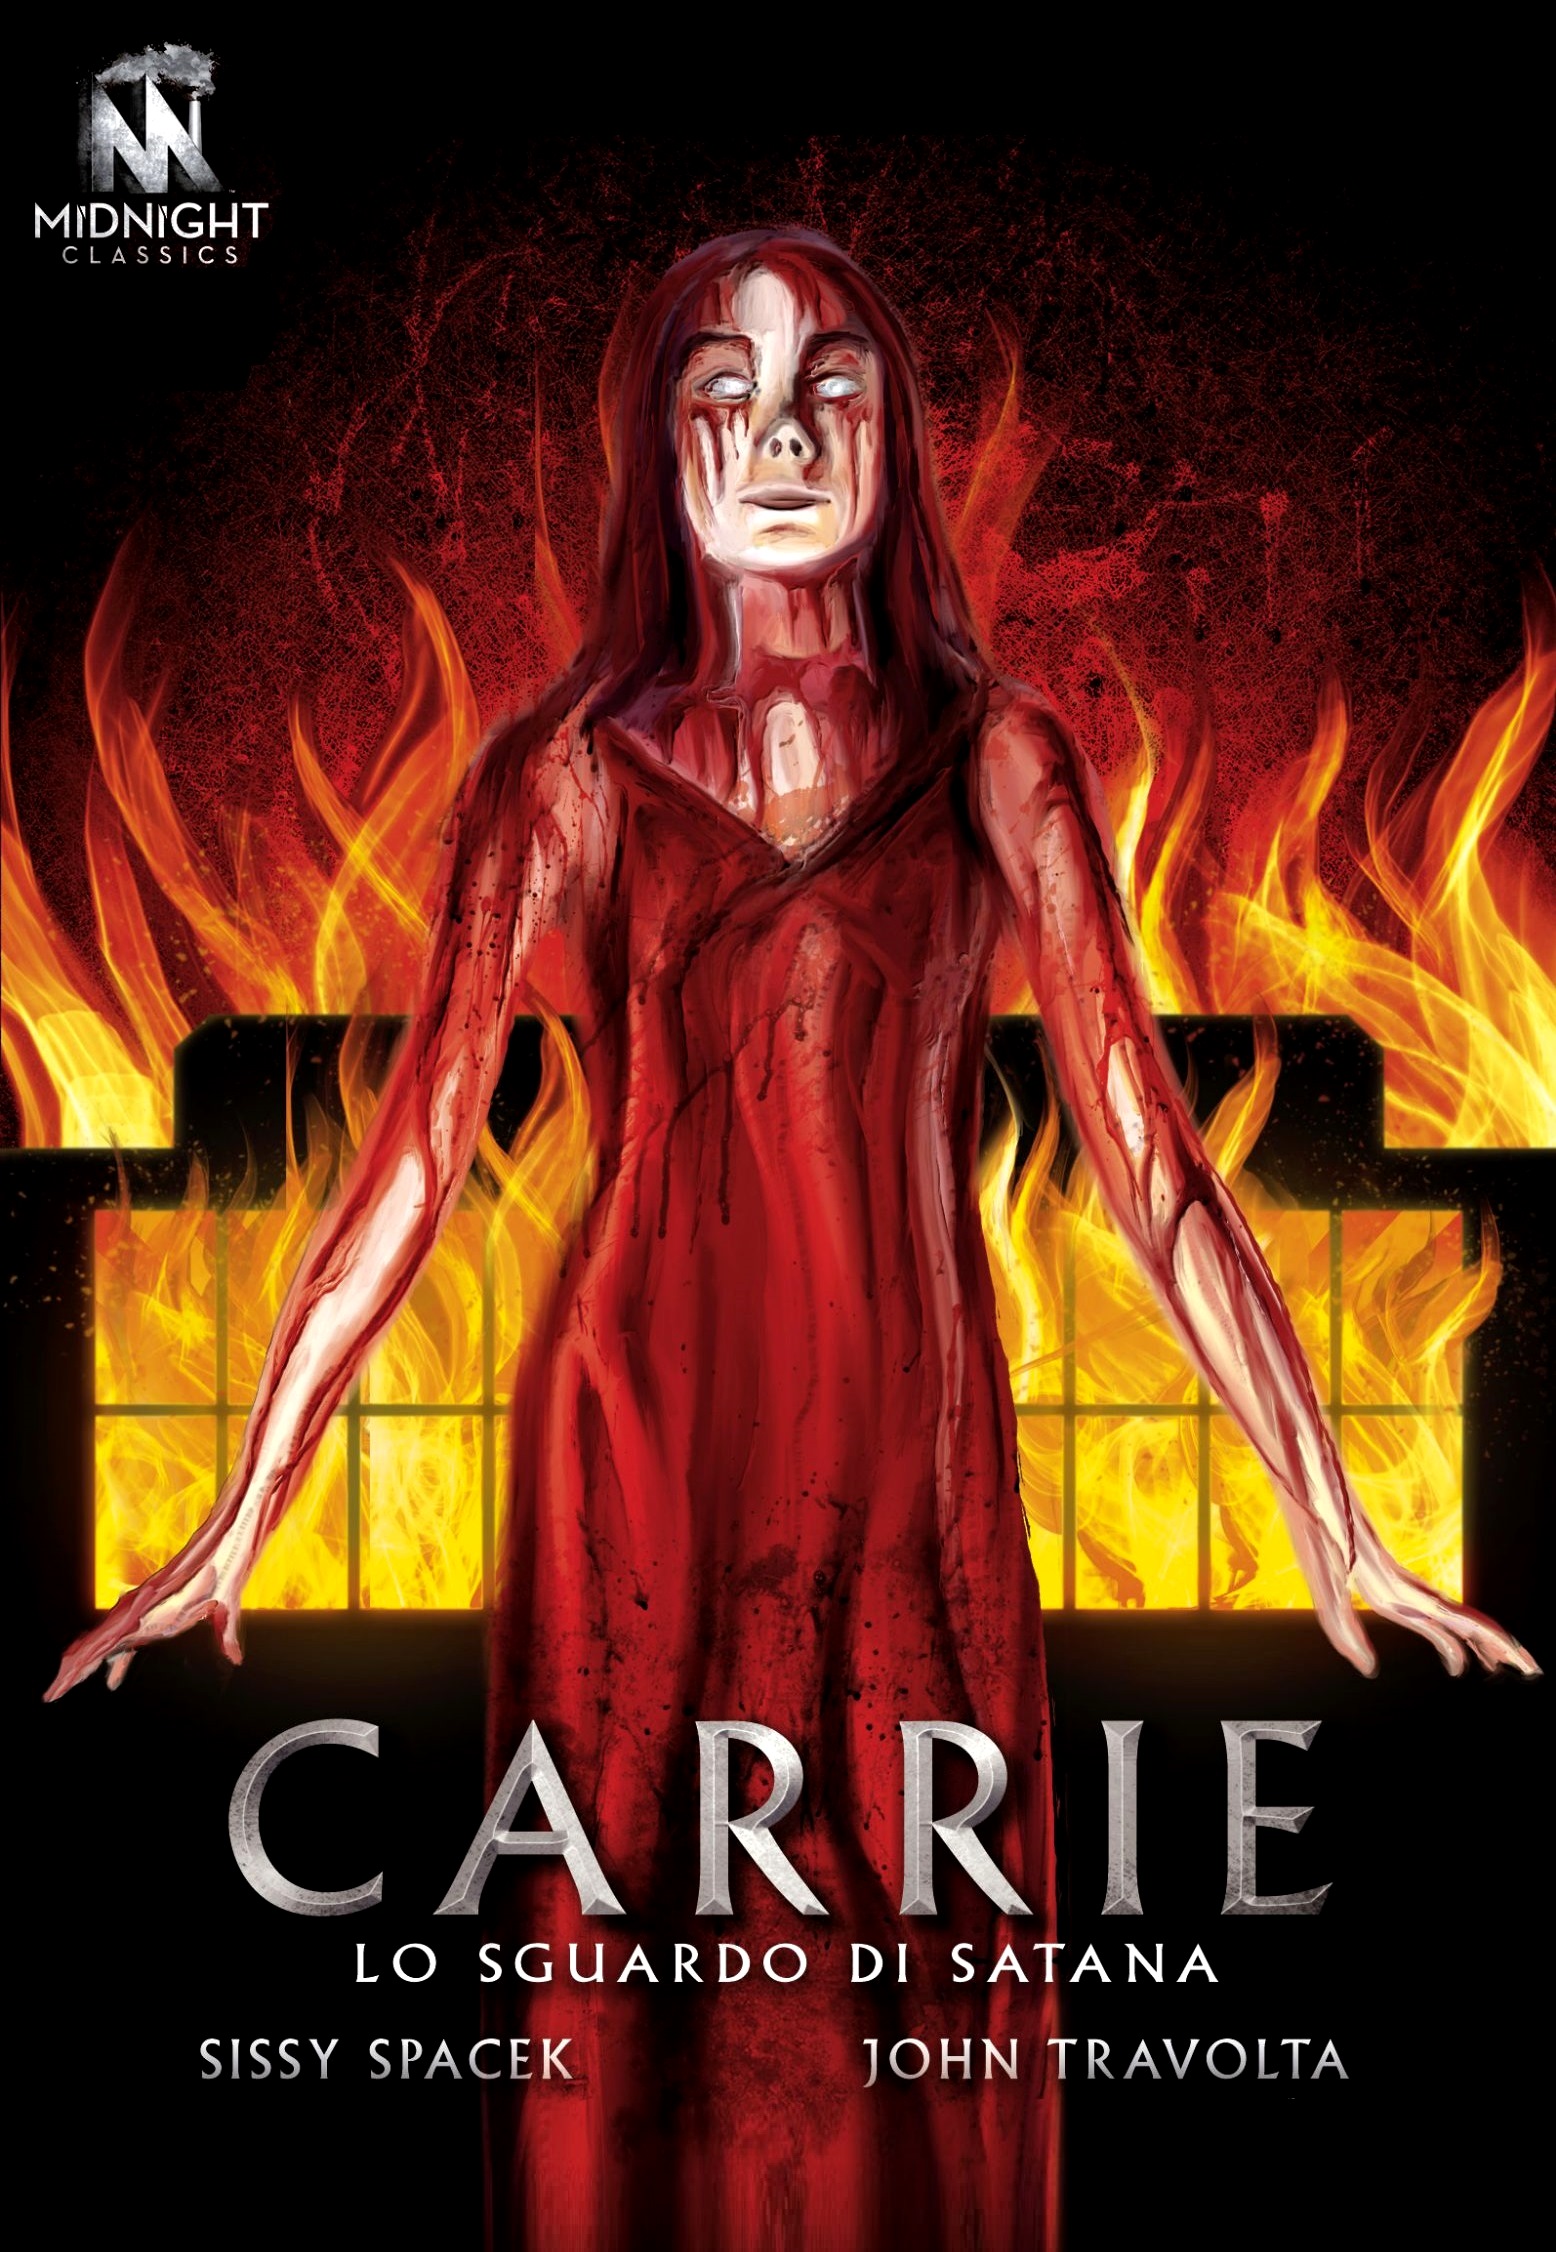 Carrie – Lo sguardo di Satana [HD] (1976)